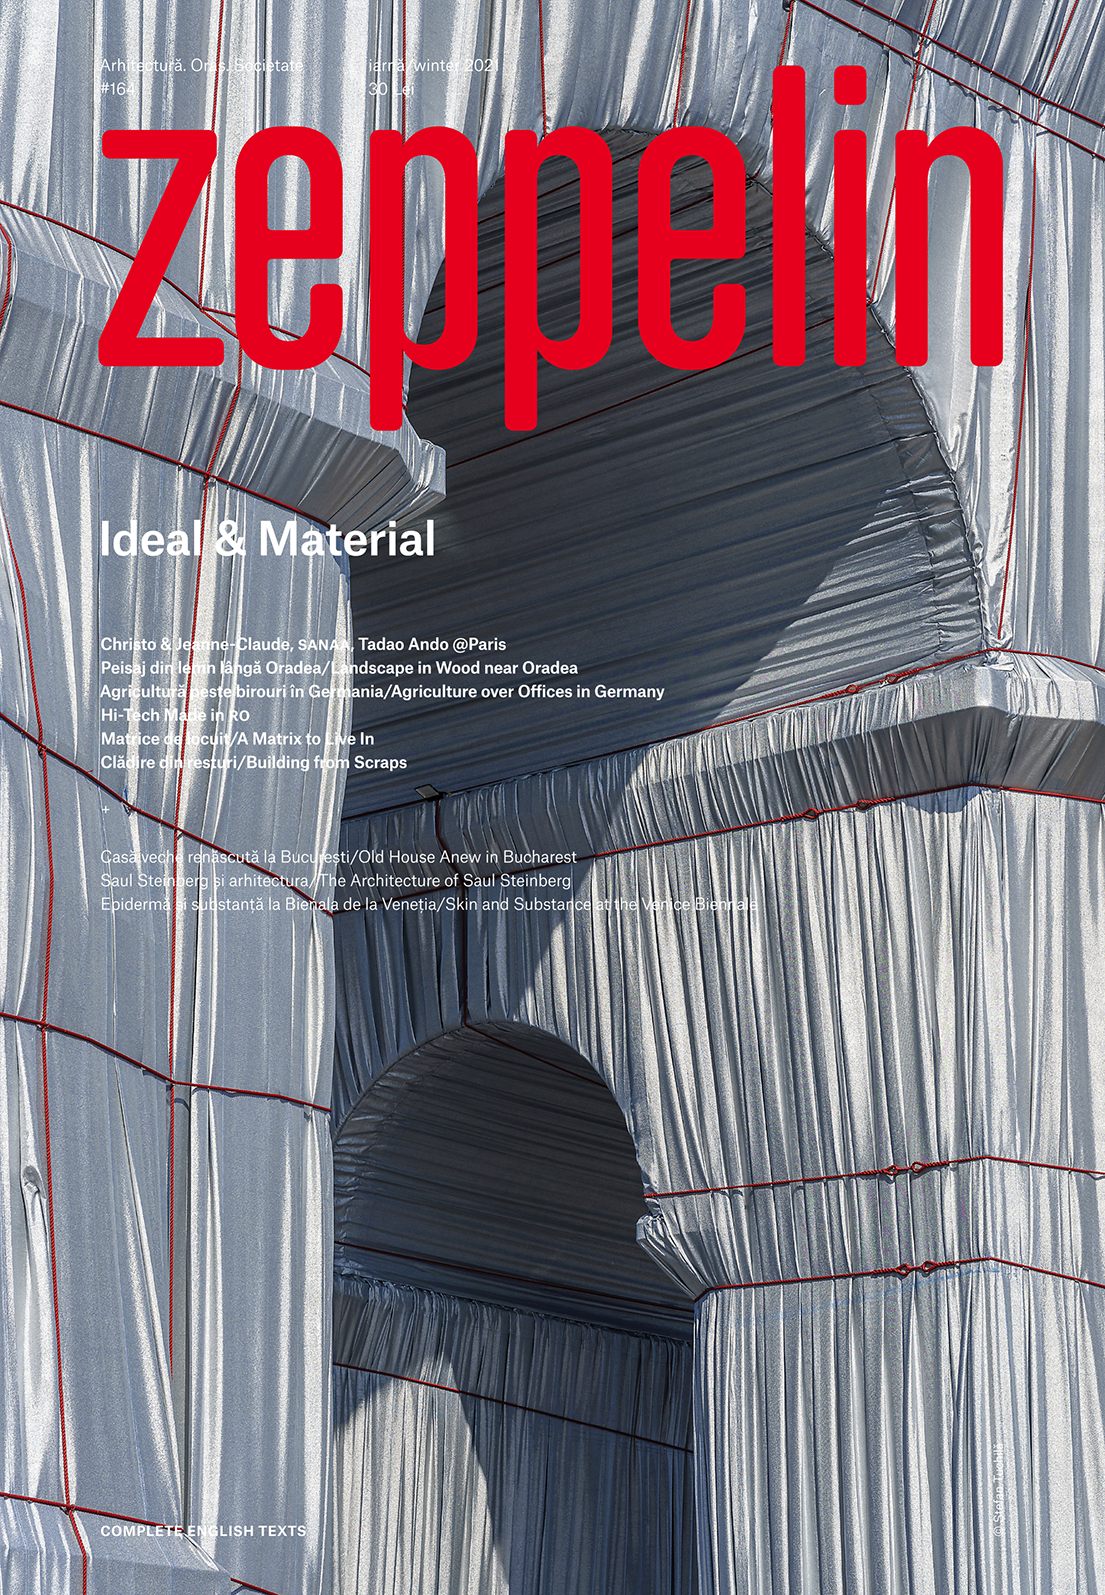 Revista Zeppelin, Nr. 164